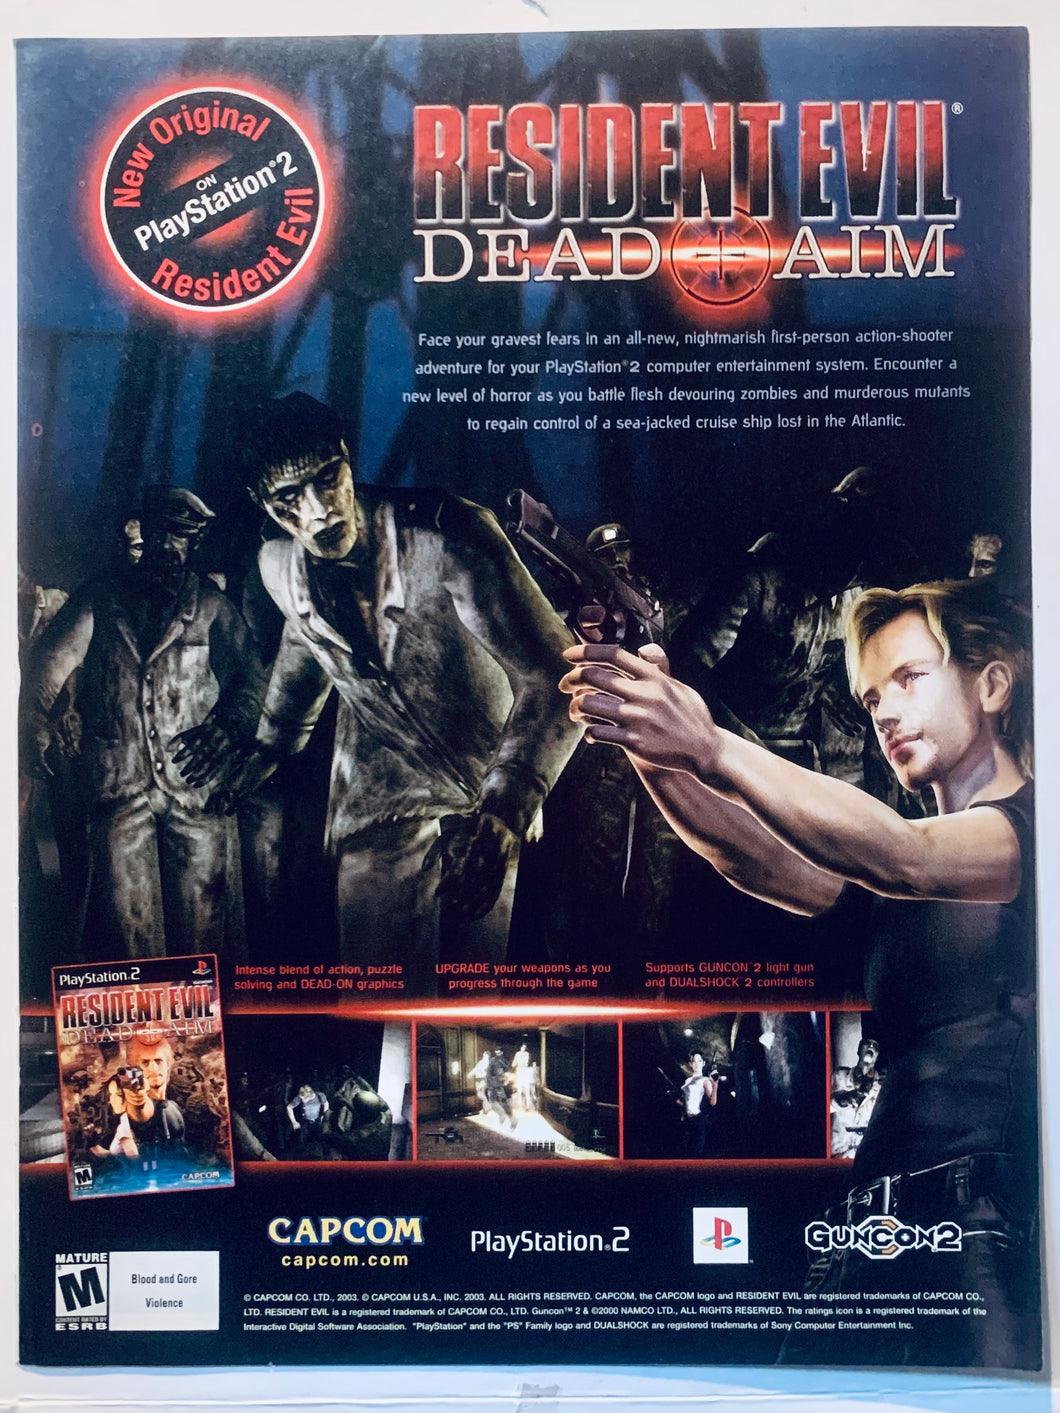 Resident Evil: Dead Aim - PS2 - Original Vintage Advertisement - Print Ads - Laminated A4 Poster